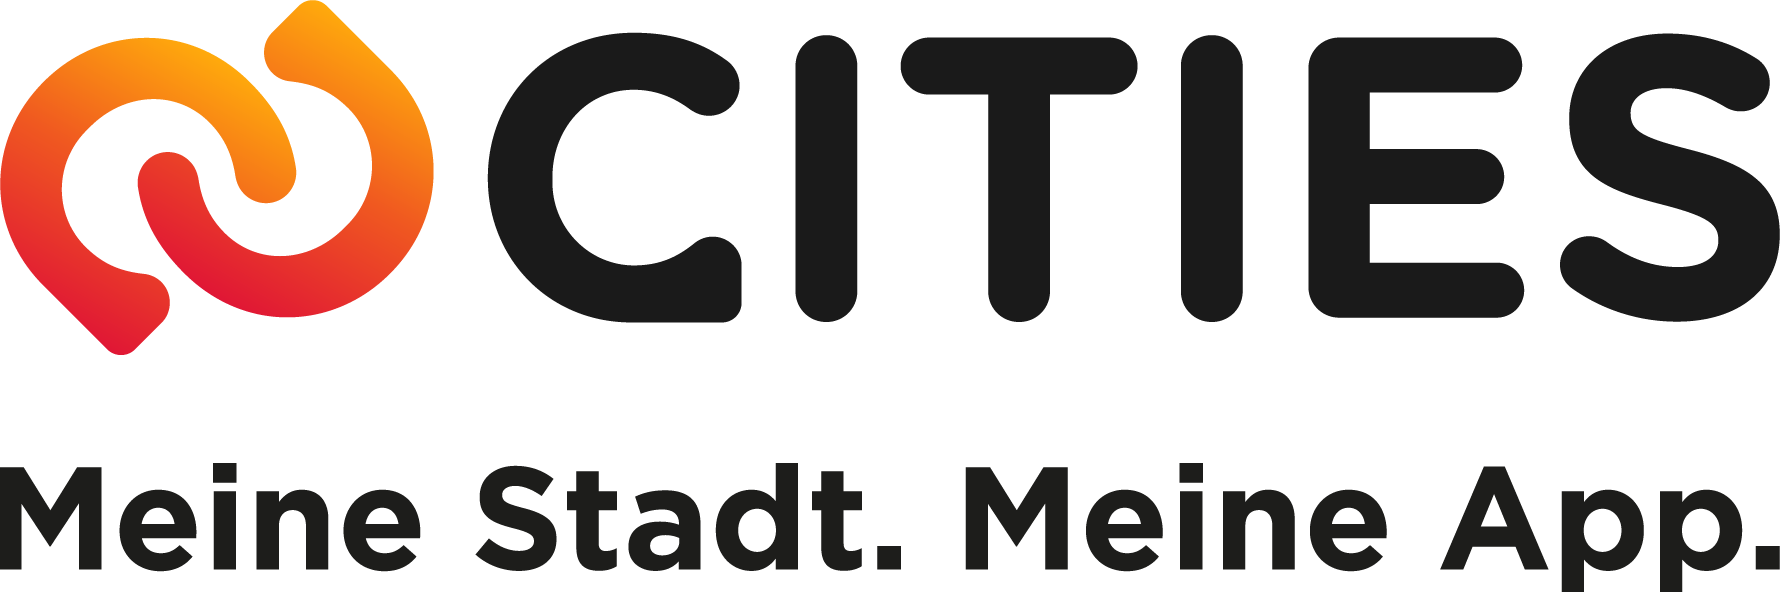 Cities Logo Slogan rgb